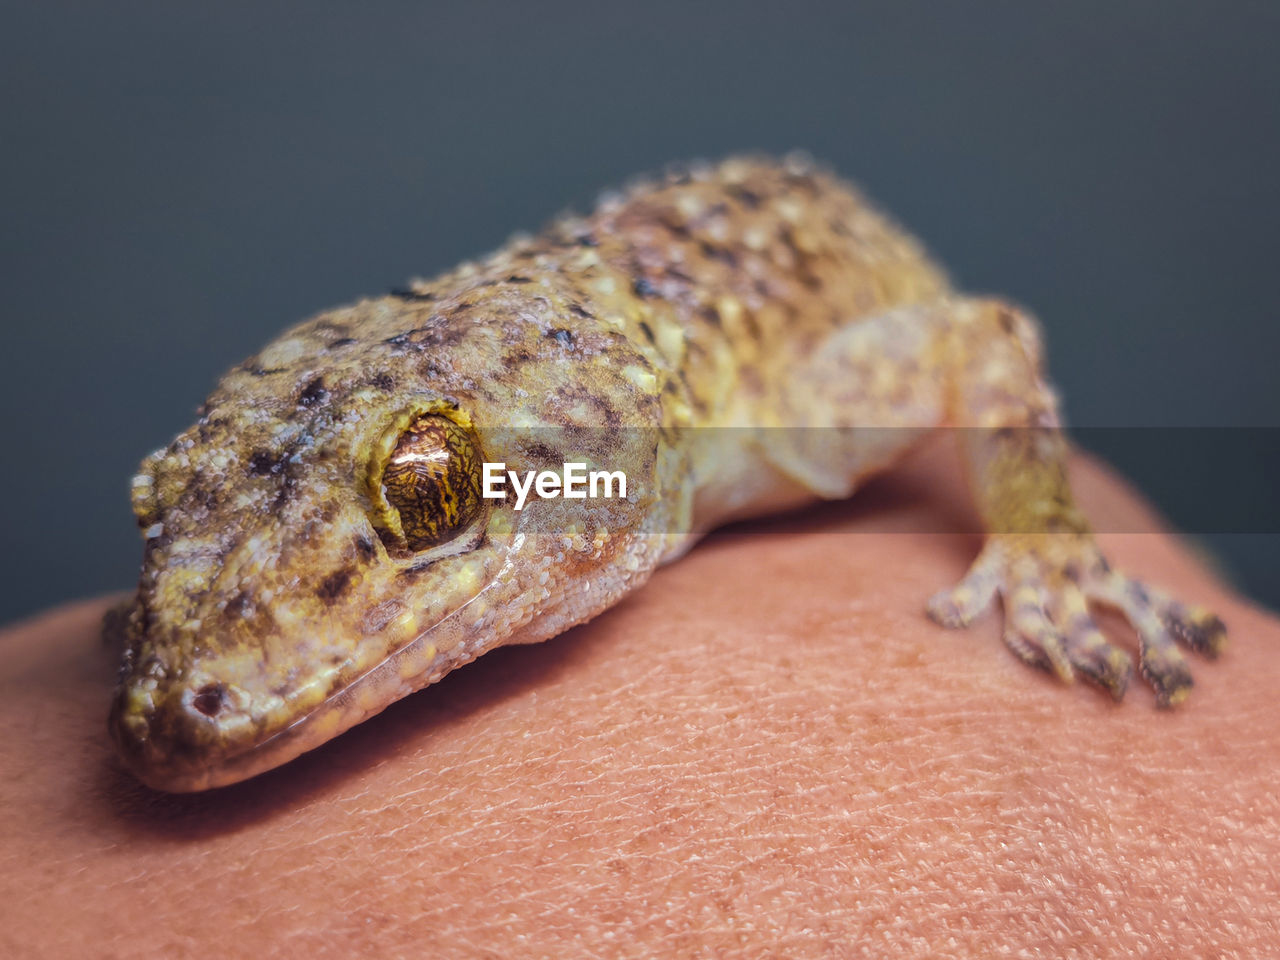 A close up gecko on human hand